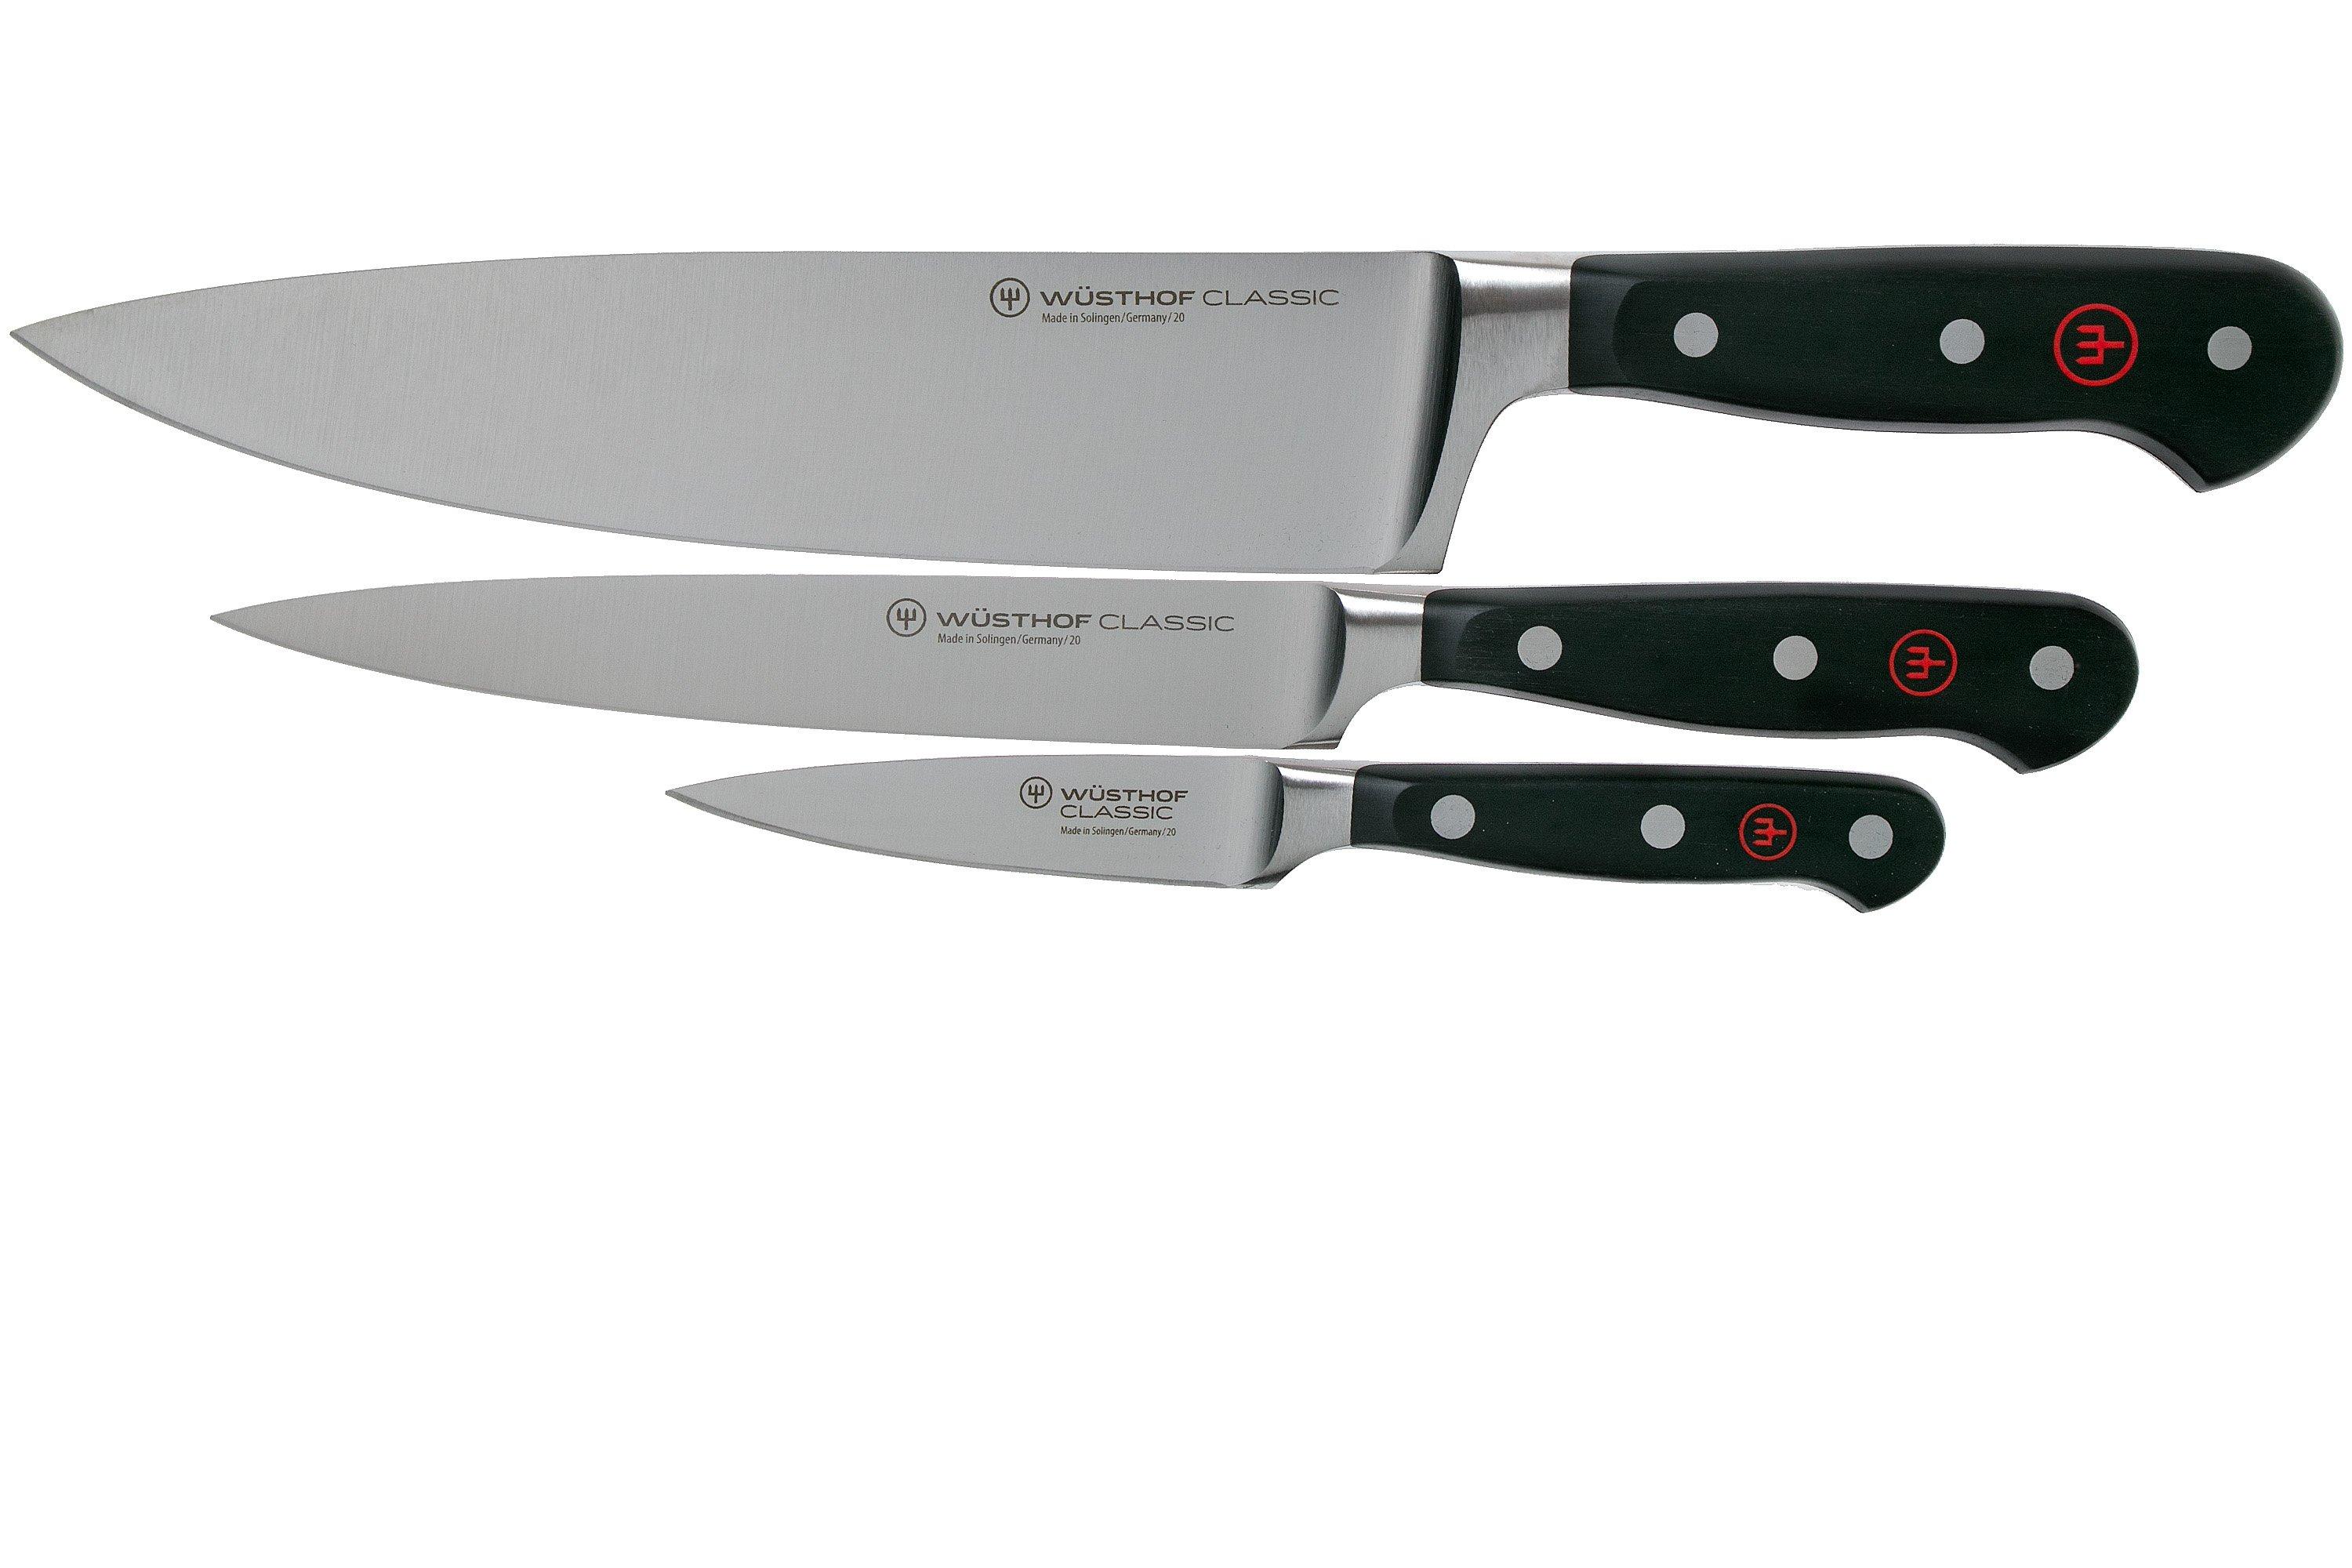 Wüsthof Classic 3-piece knife set, 1120160301  Advantageously shopping at